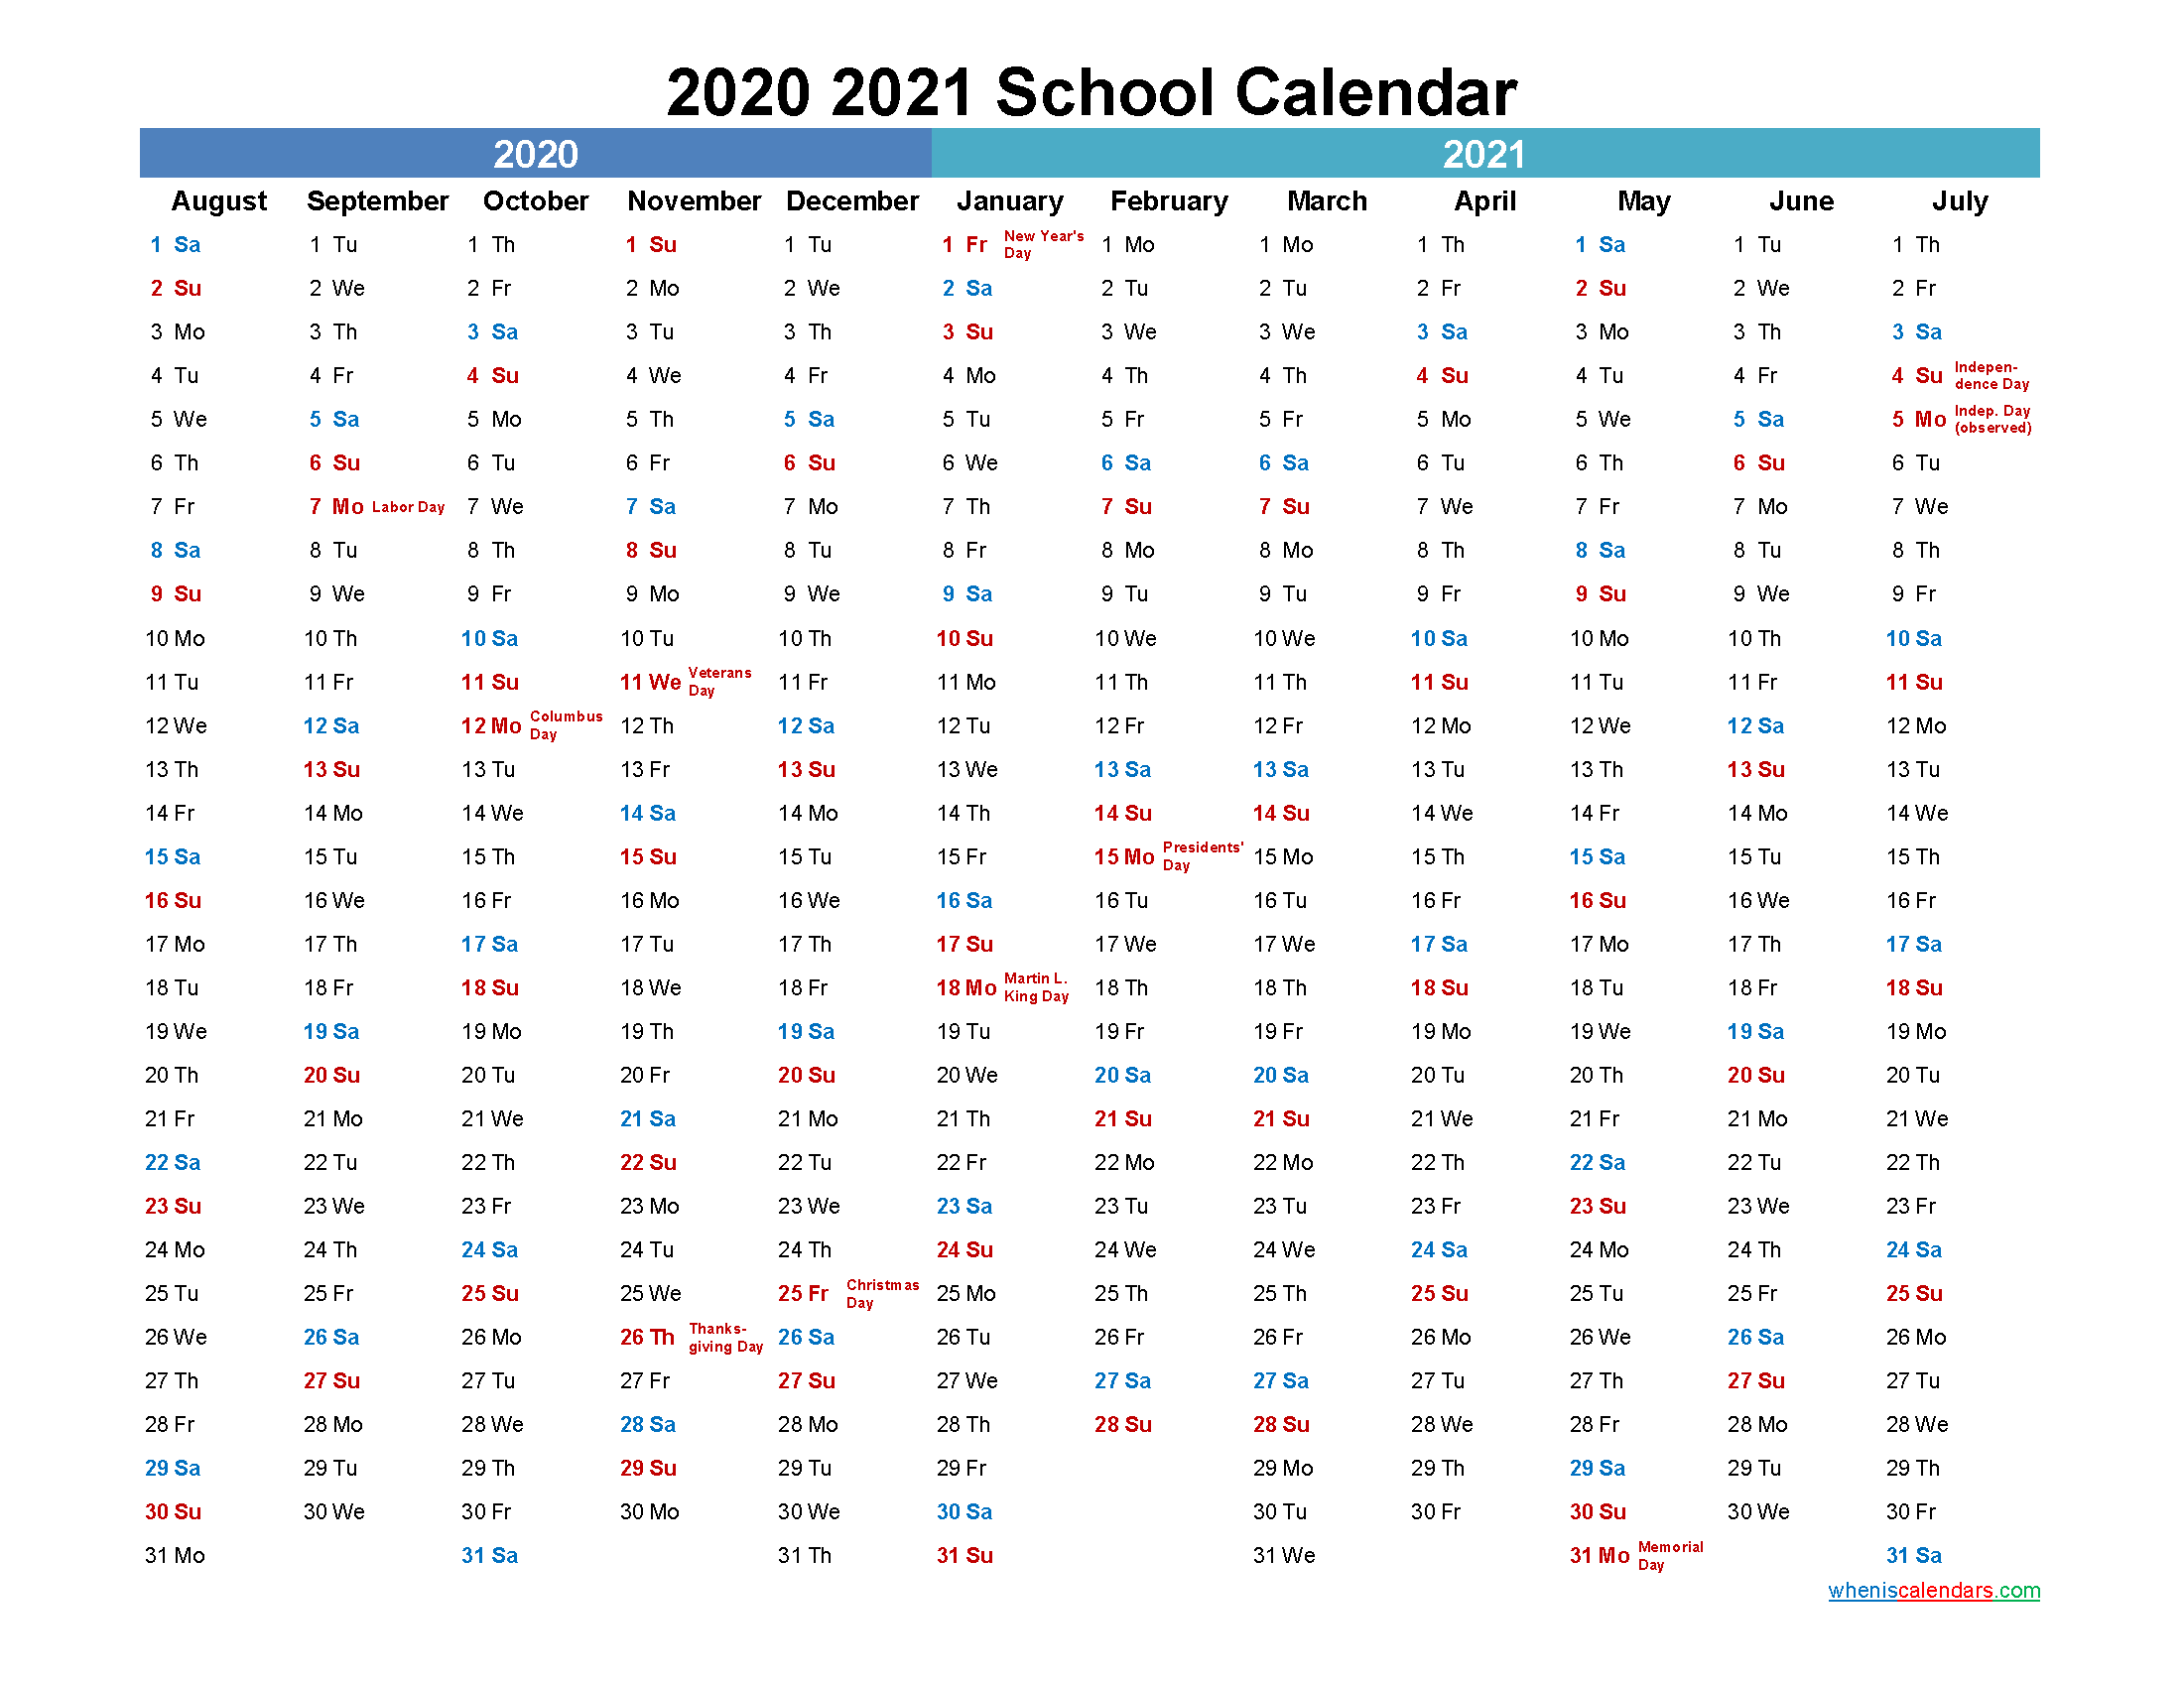 2020 and 2021 School Calendar Printable - Template No.21scl25